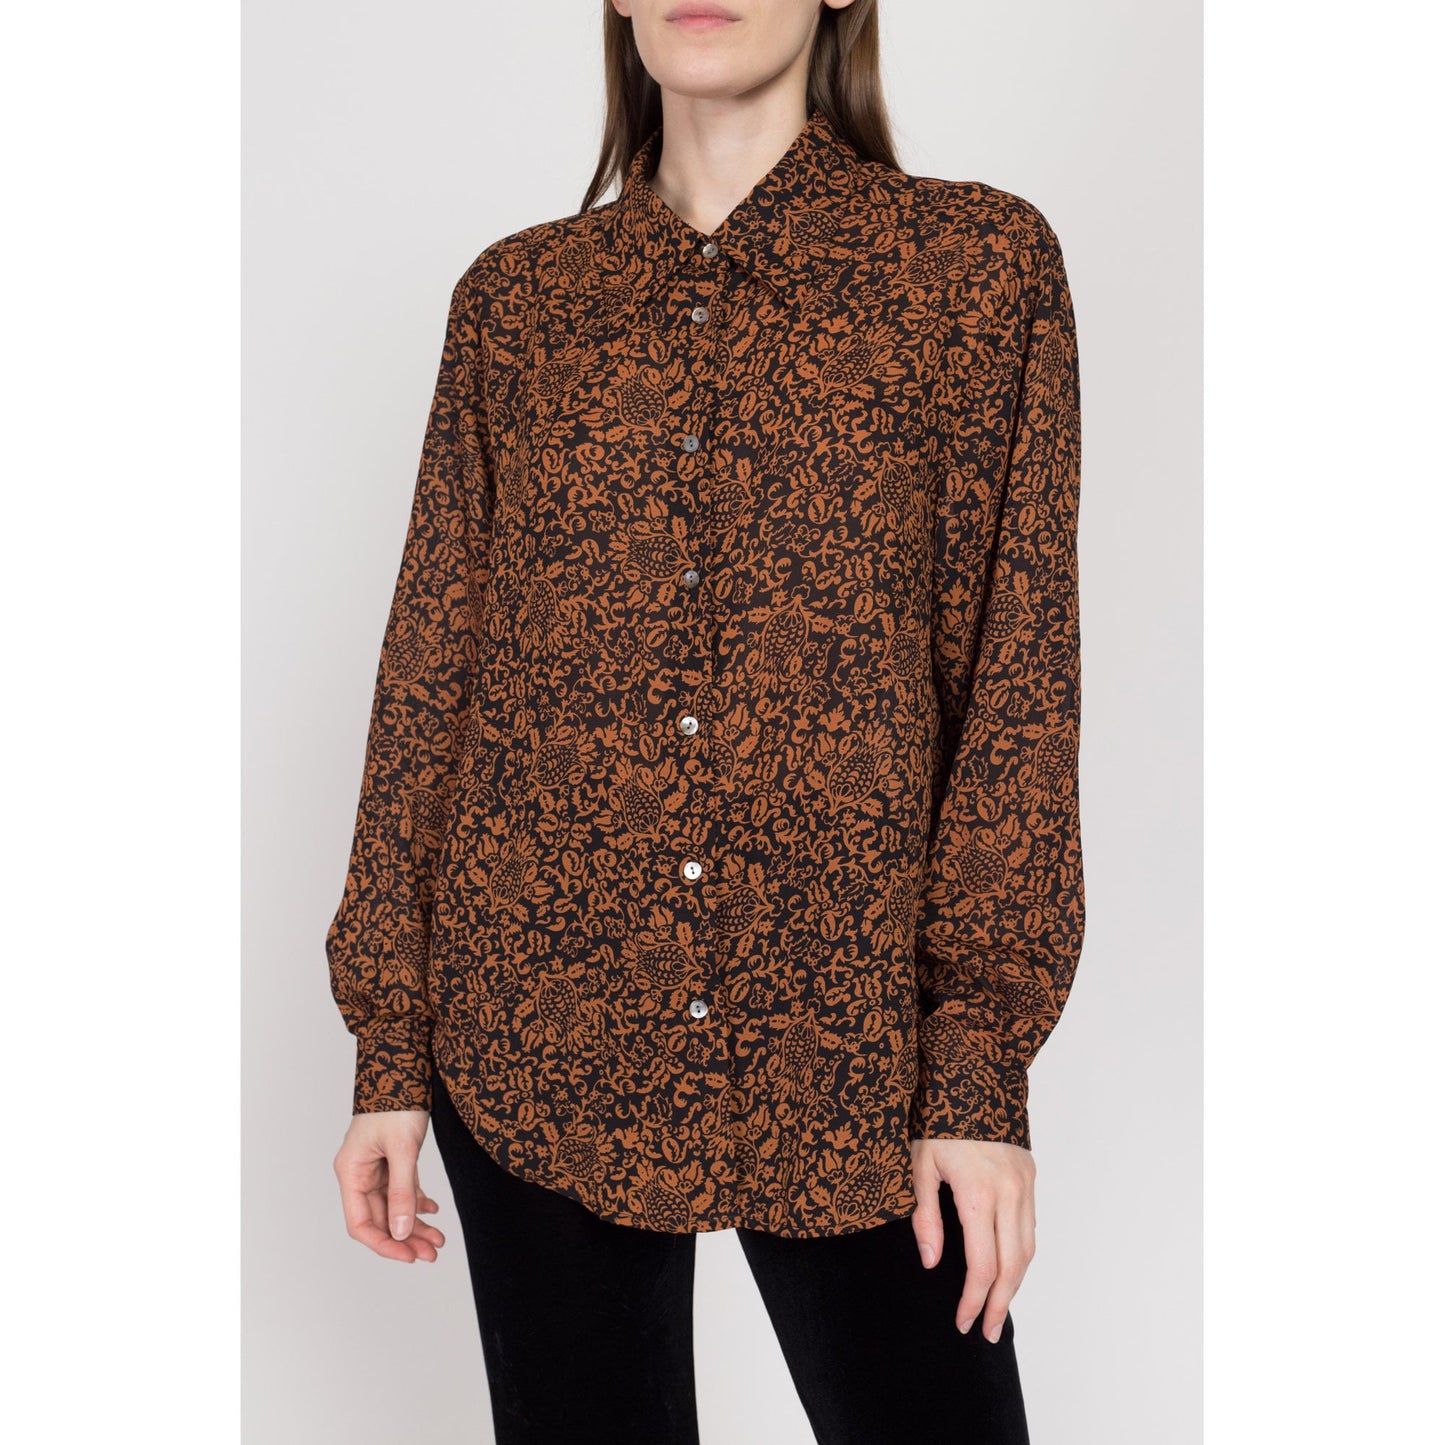 Large 80s Baroque Black & Orange Floral Blouse | Vintage Long Sleeve Button Up Oversize Secretary Top